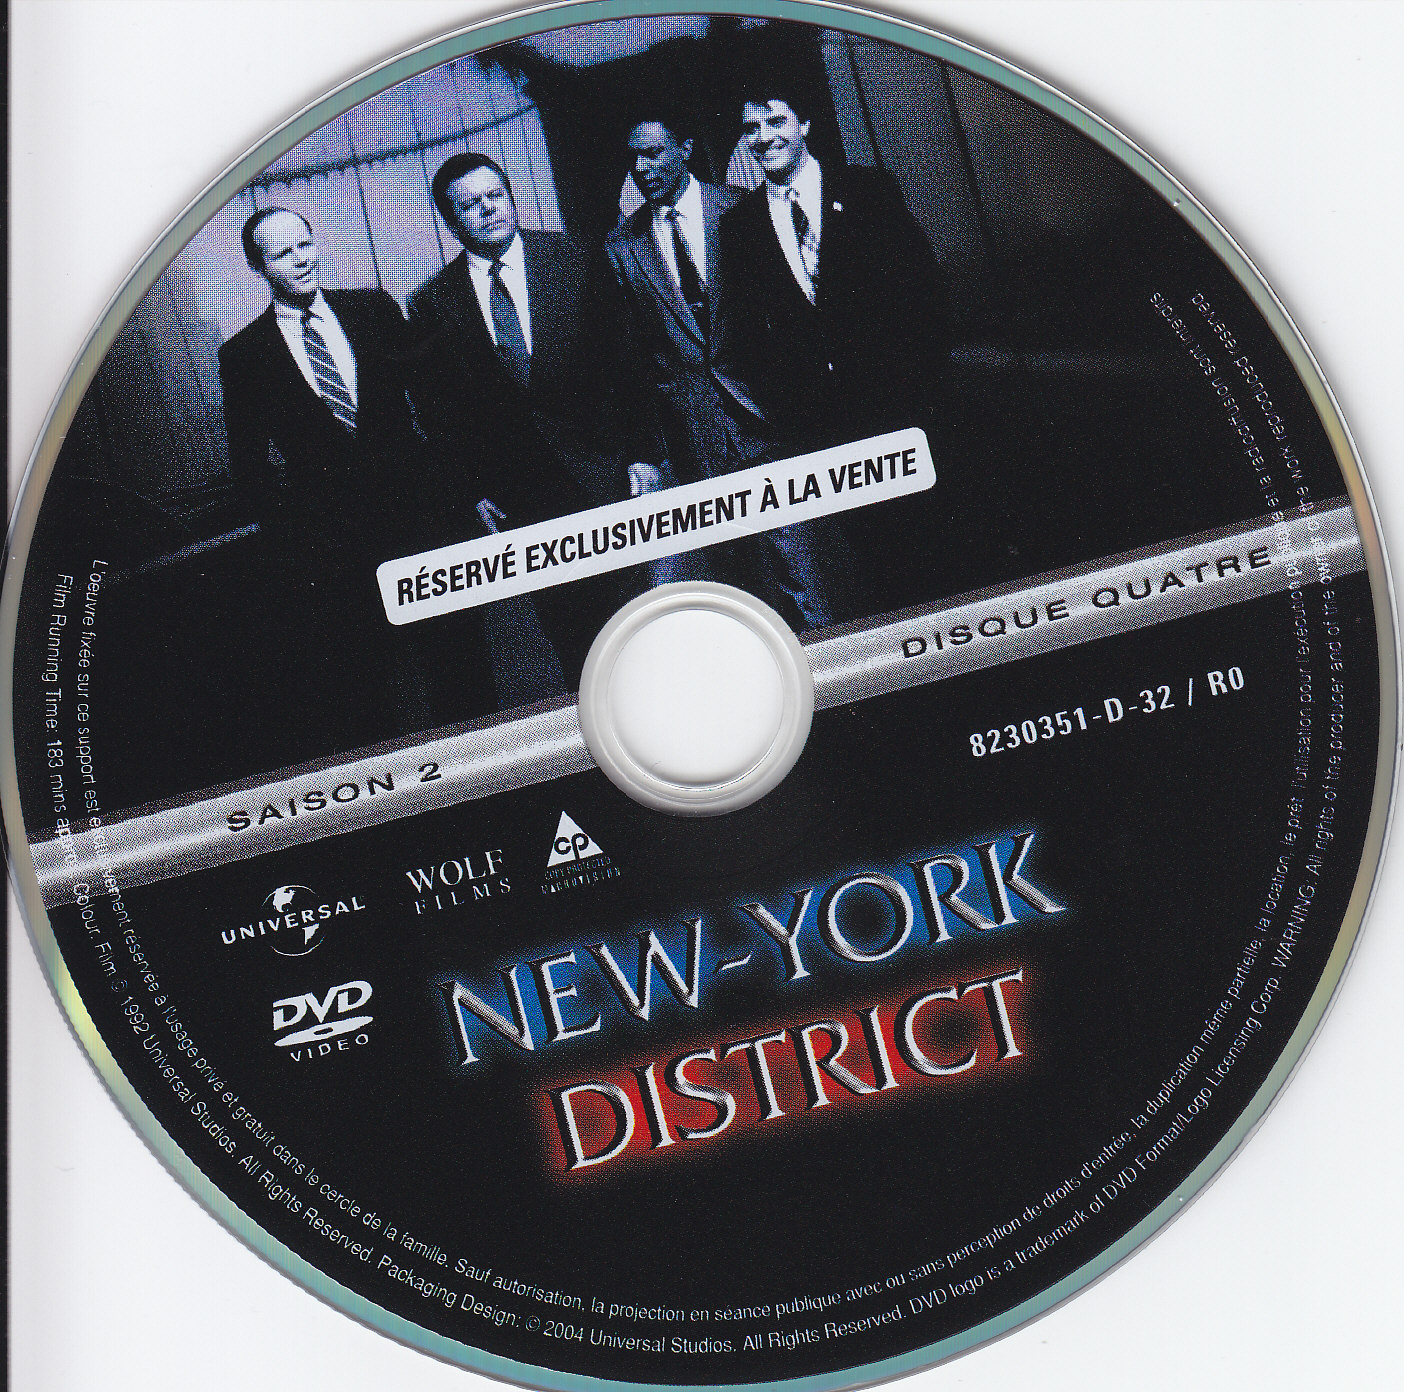 New York district Saison 2 DISC 4